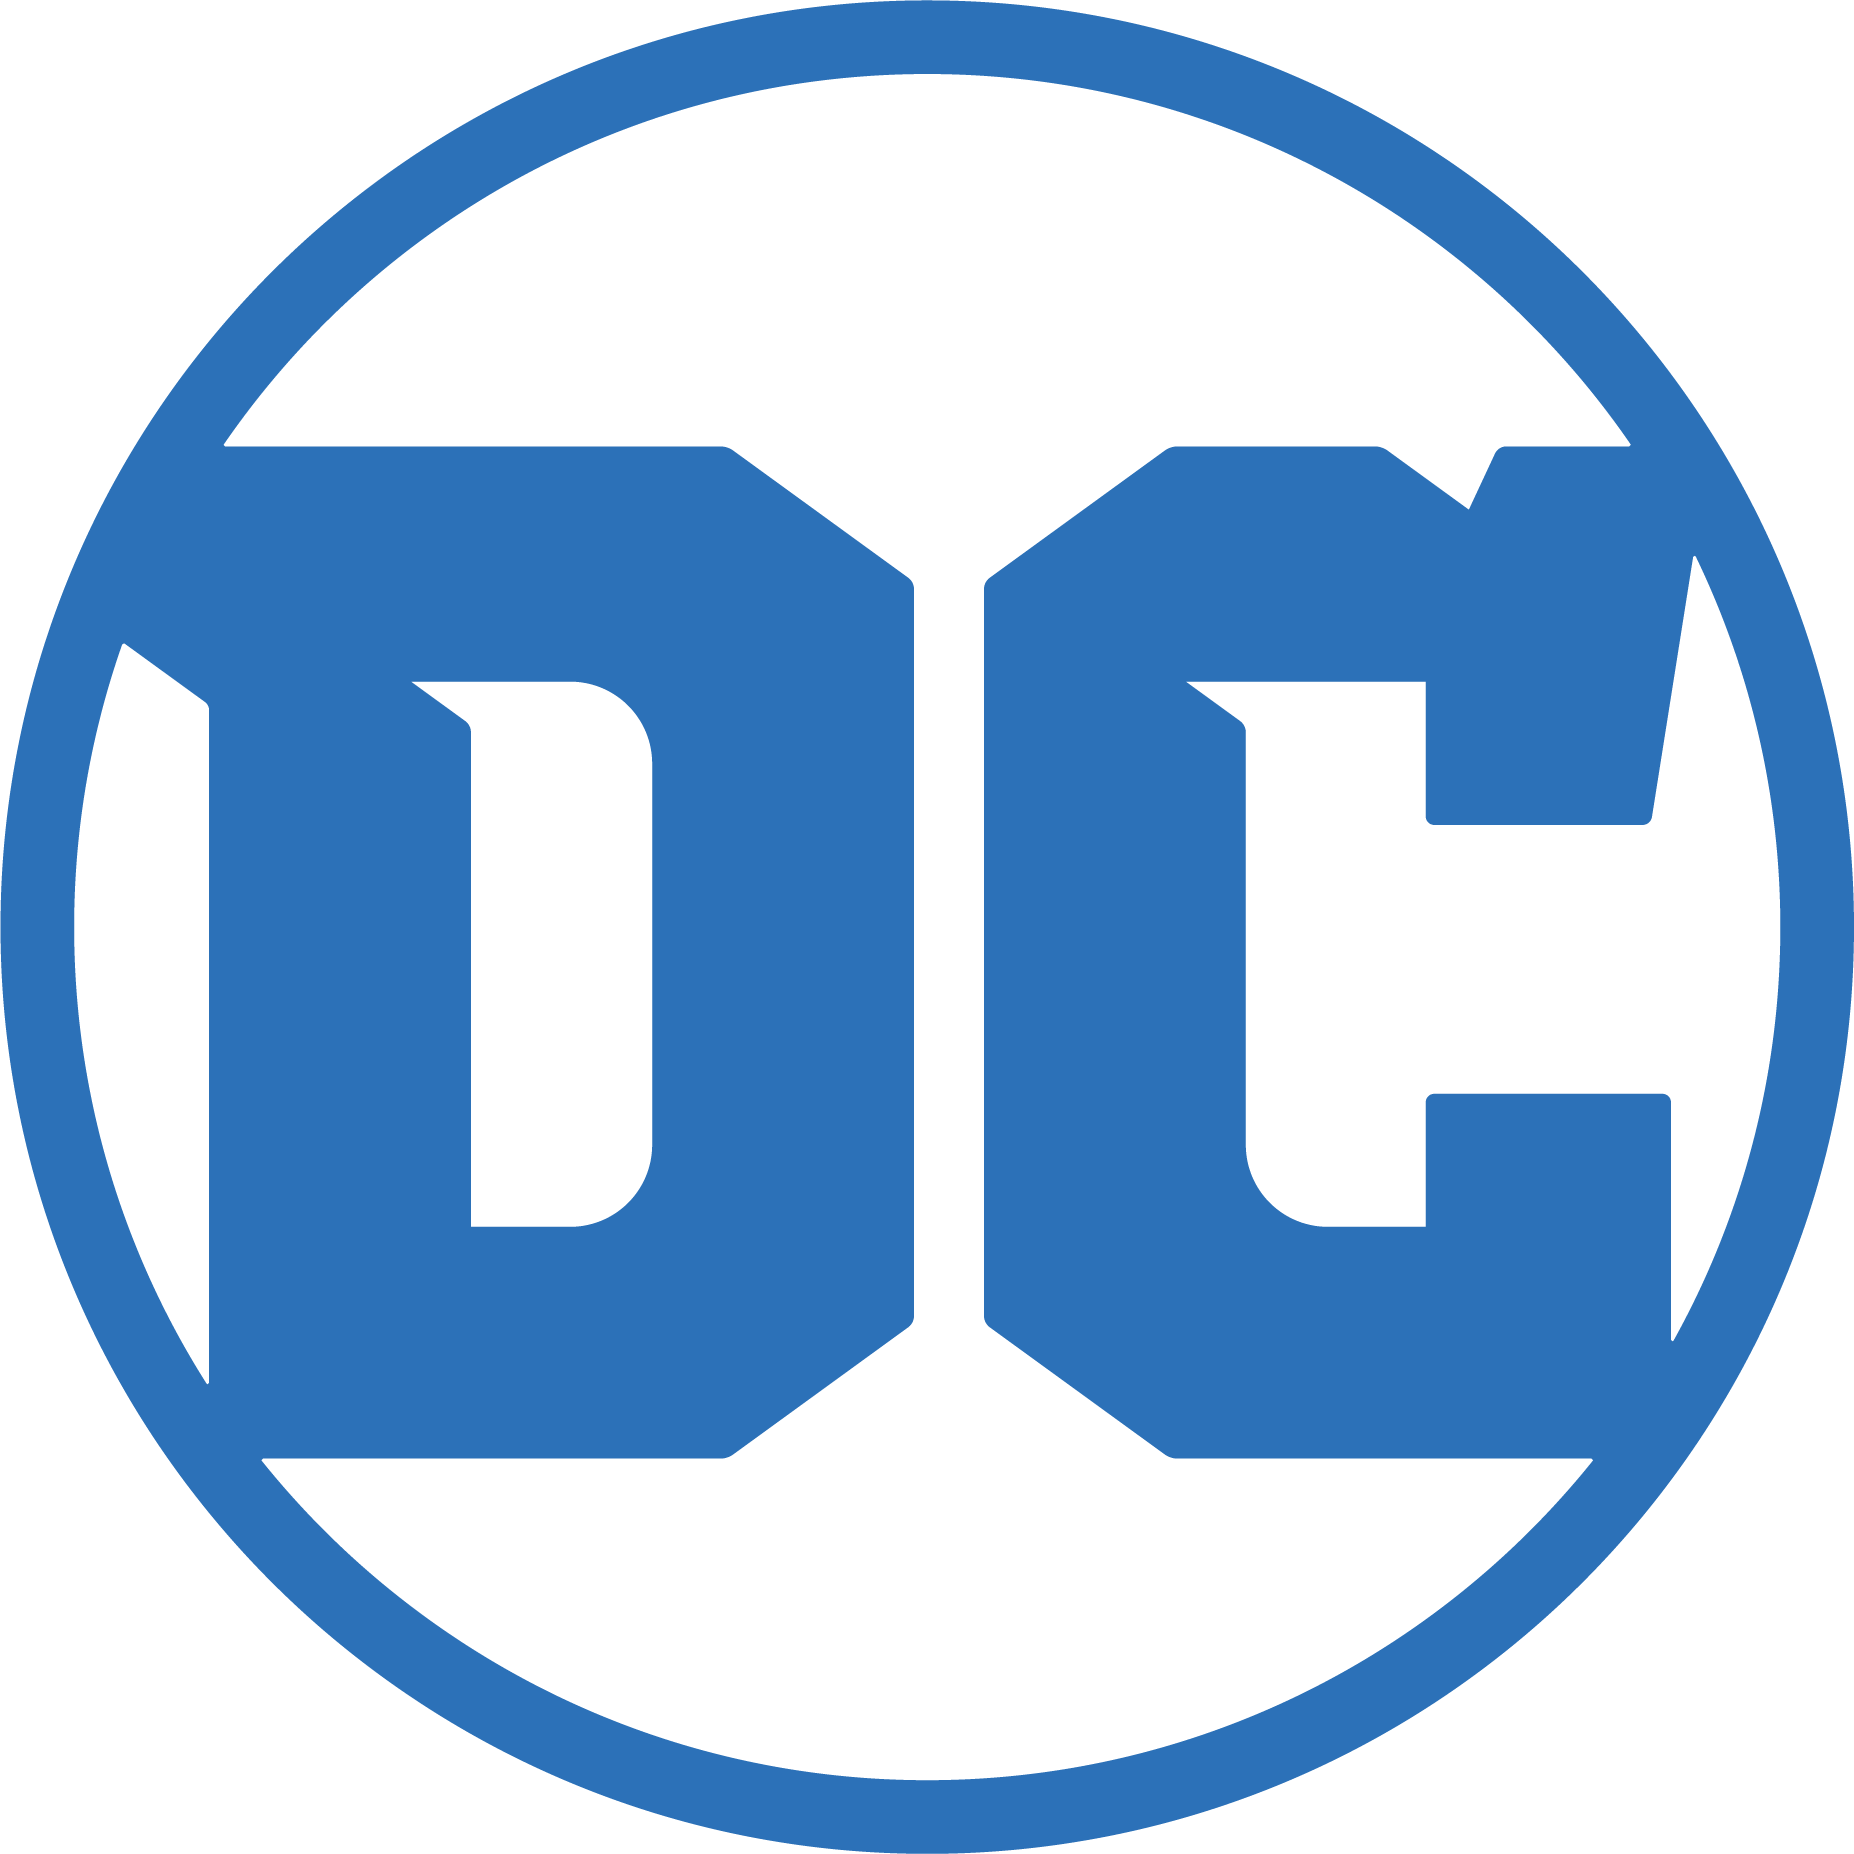 Dc Comics Logo Vector Eps Free Download - Diamond Select Toys Batman Vinimates Vinyl Figure (1854x1854)